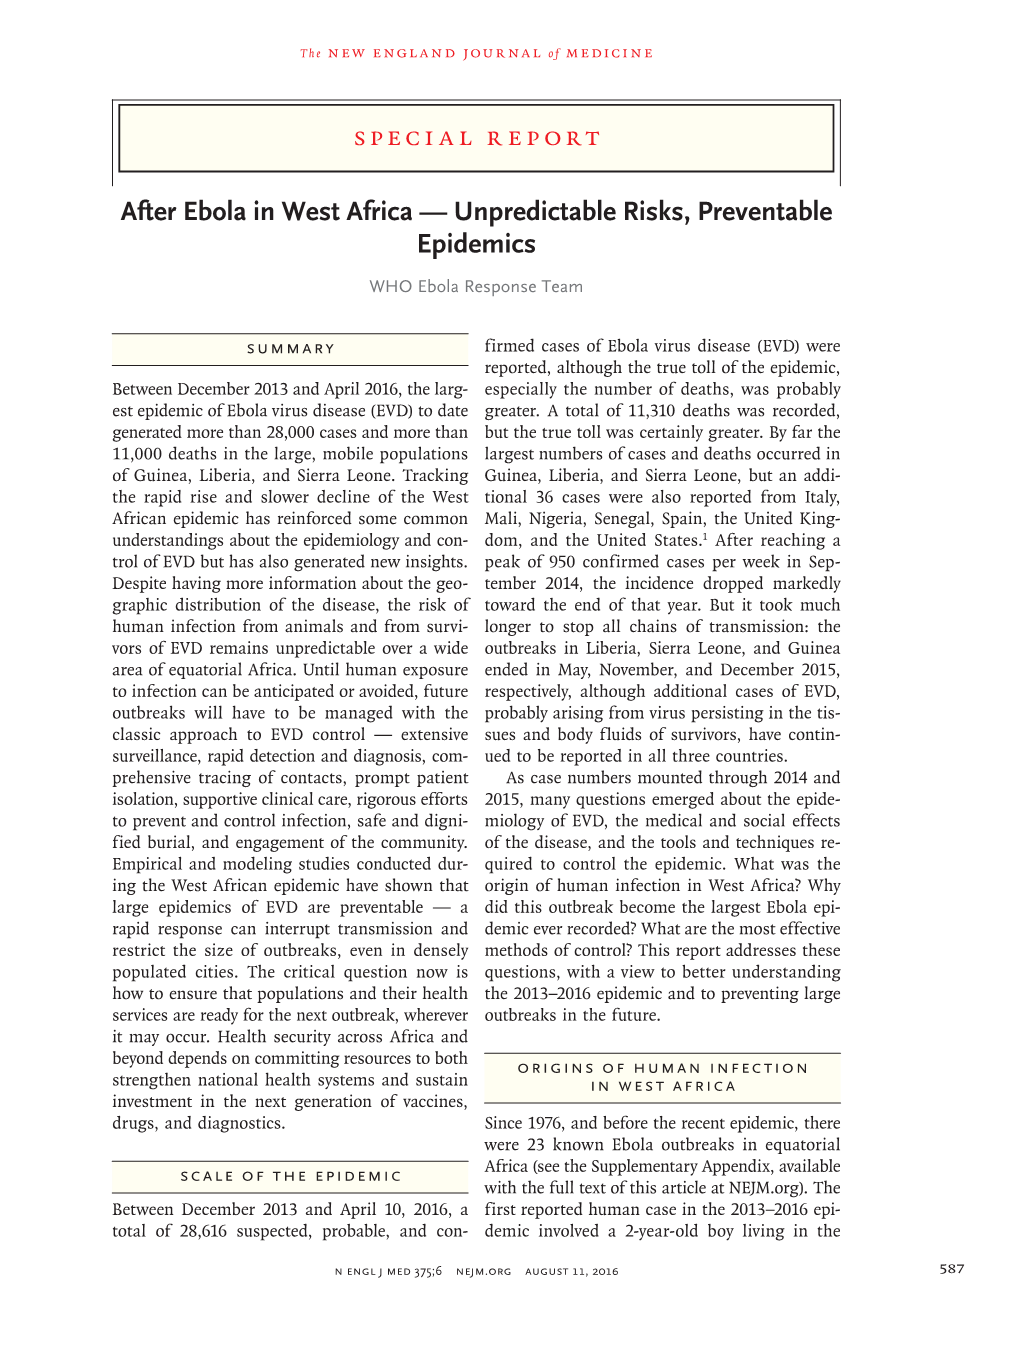 After Ebola in West Africa — Unpredictable Risks, Preventable Epidemics